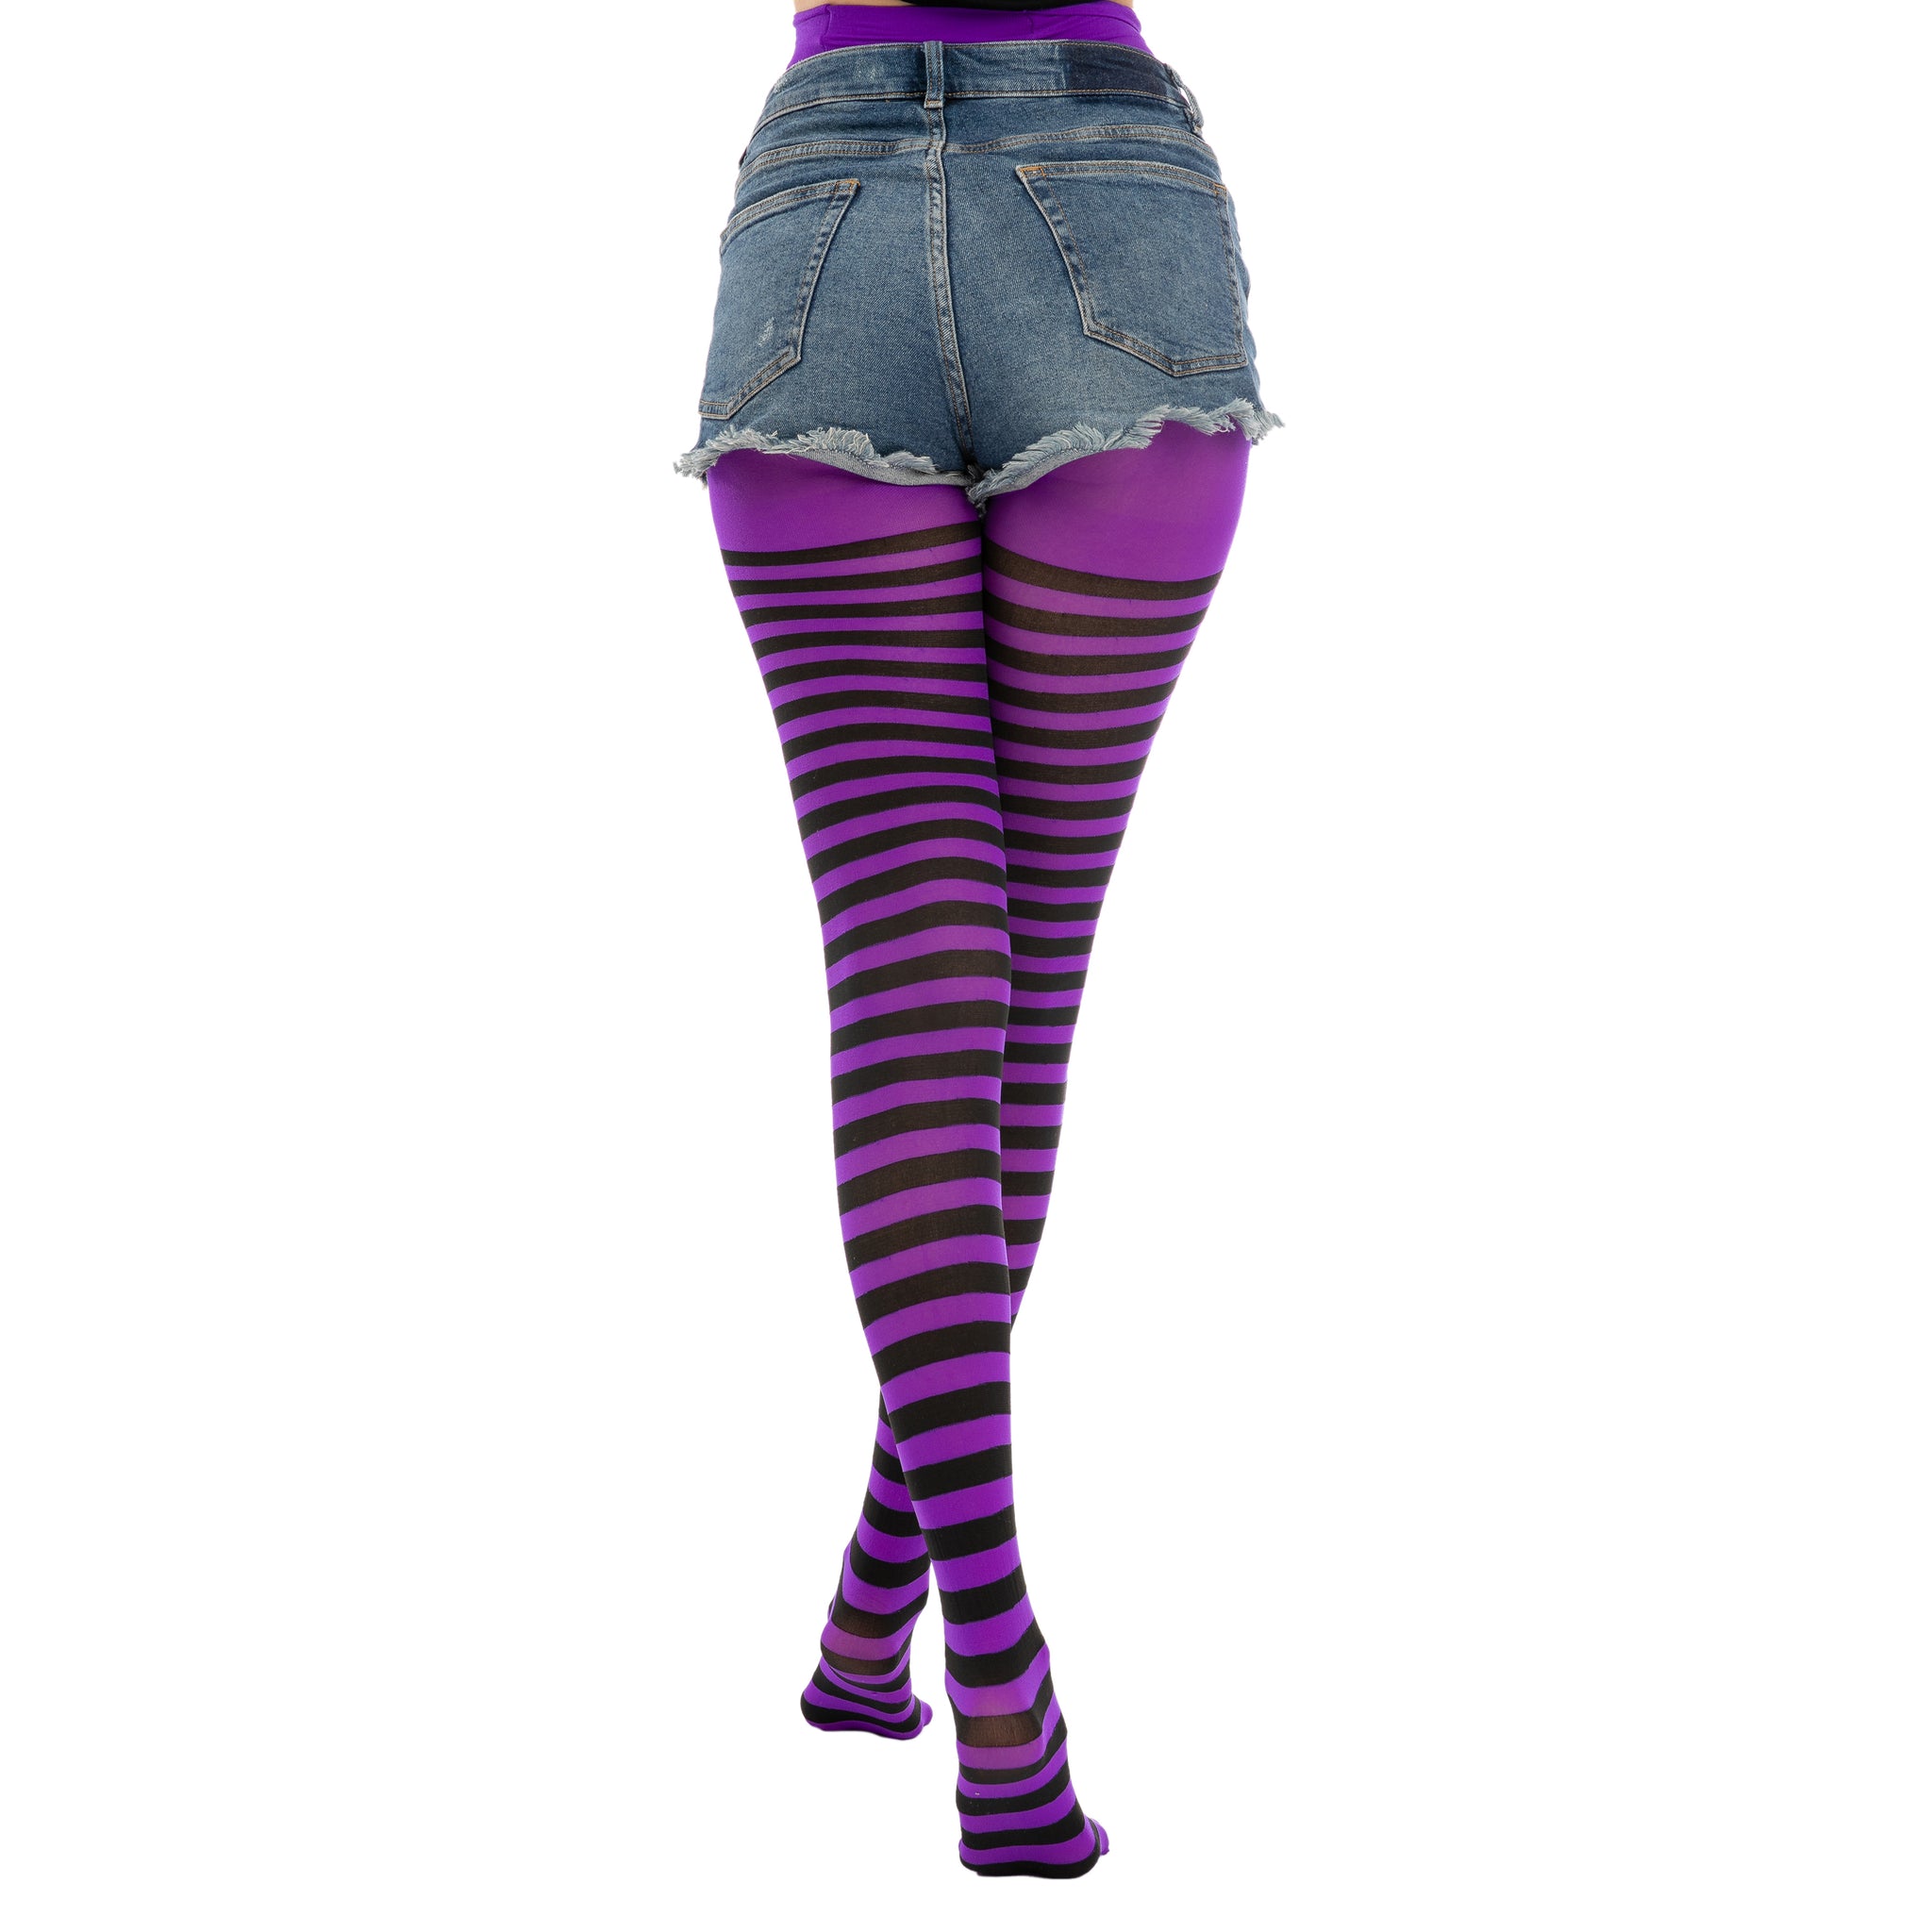 Black and Purple Striped Tights